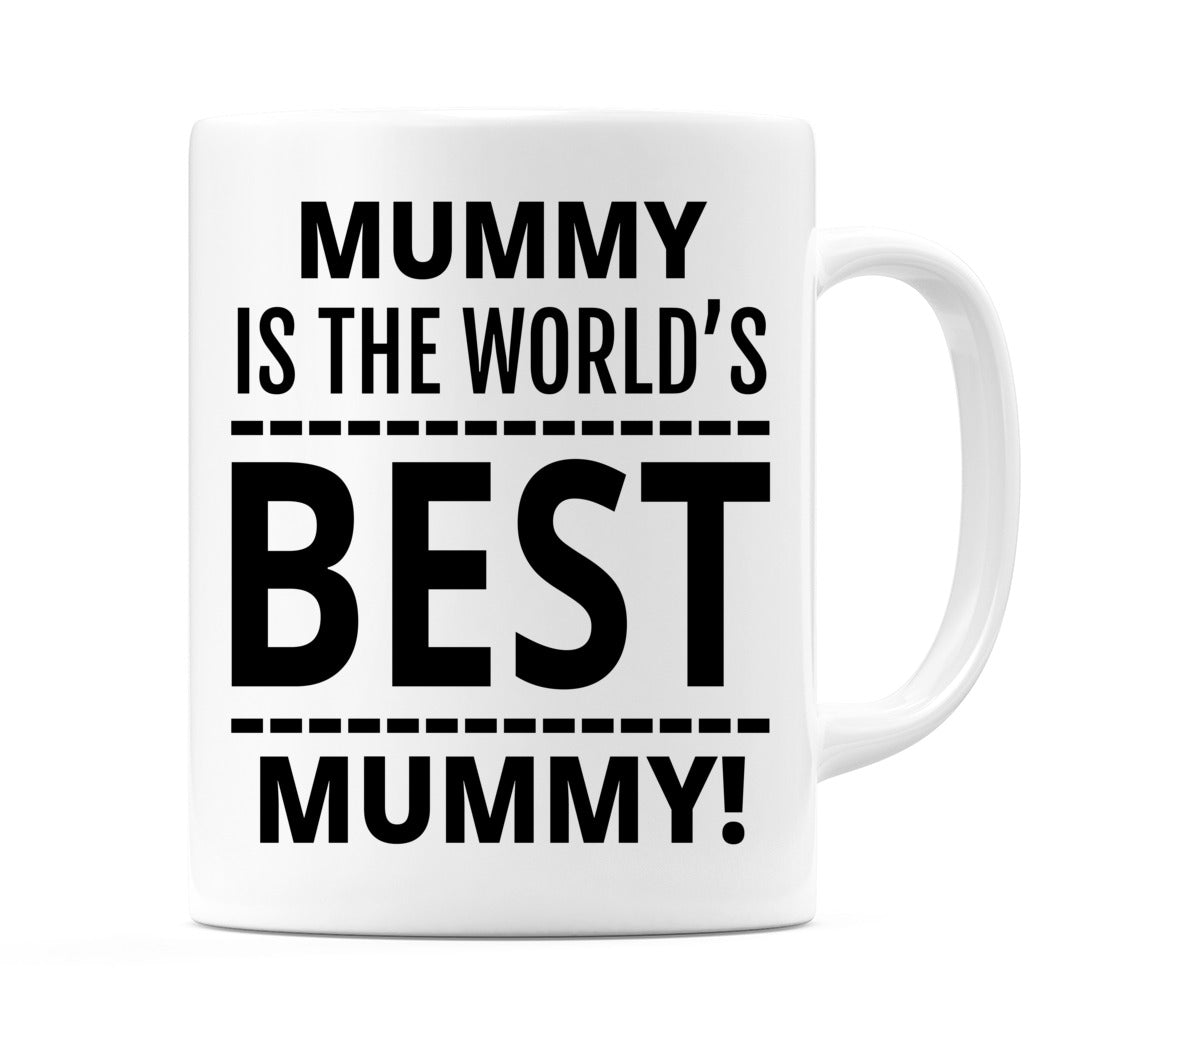 Mummy is The World's BEST Mummy! Mug Mug